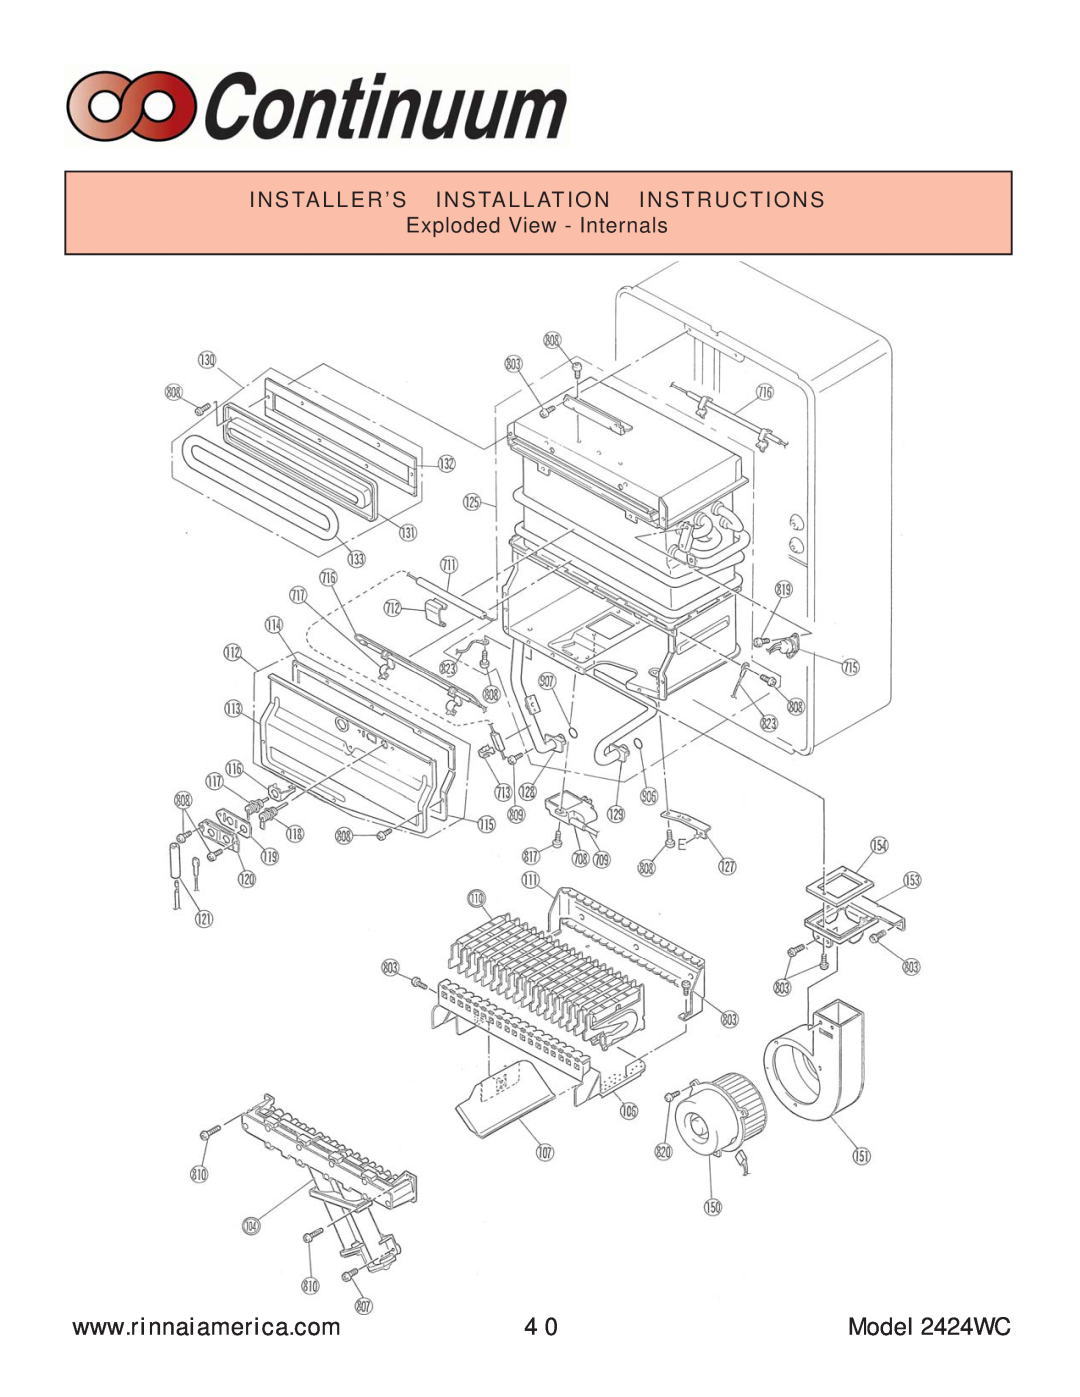 Rinnai manual Model 2424WC, Installer’S Installation Instructions, Exploded View - Internals 